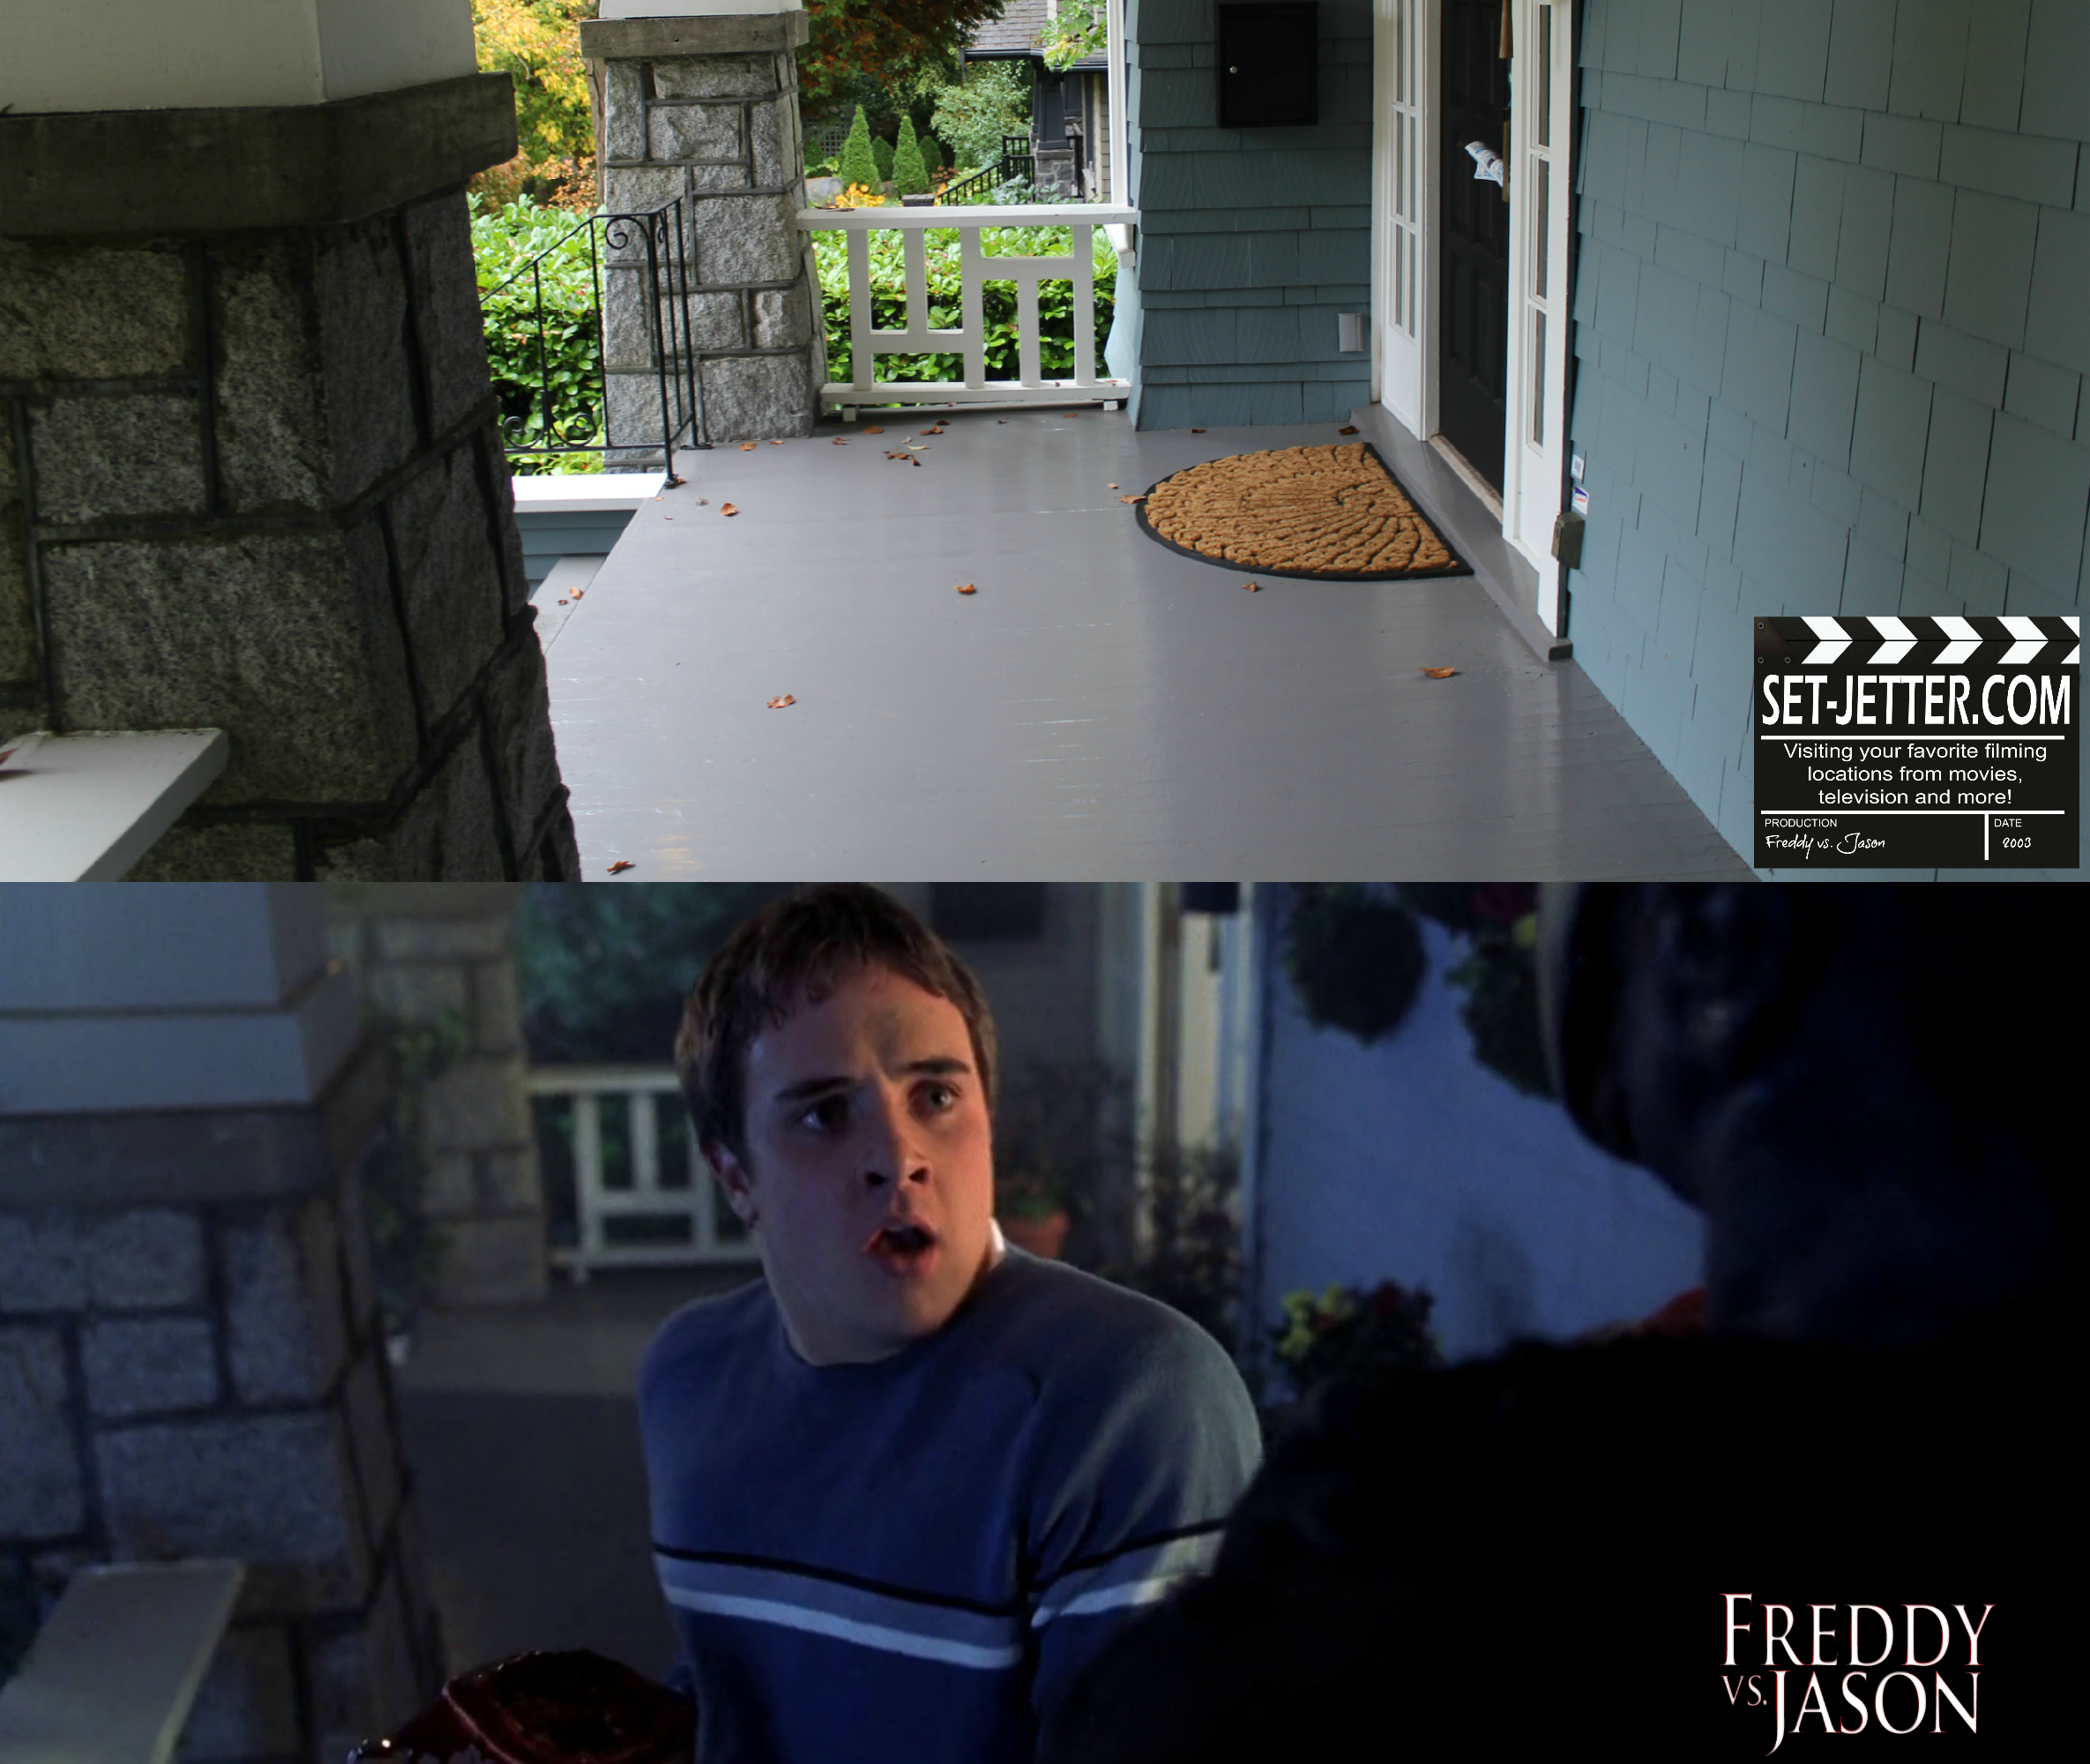 Freddy vs Jason comparison 29.jpg